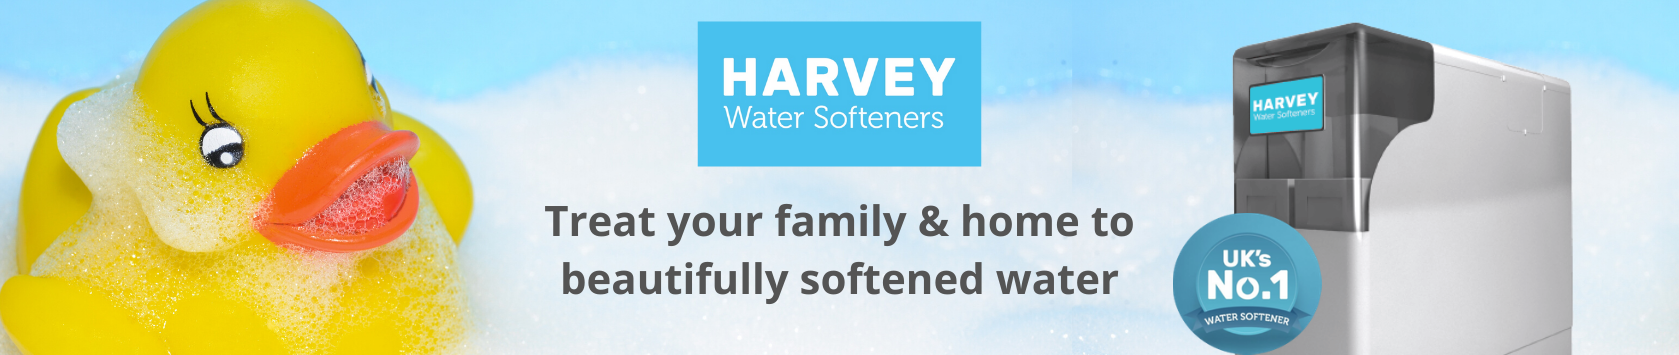 UK's no.1 Harveys Water Softener with yellow rubber duck in bath